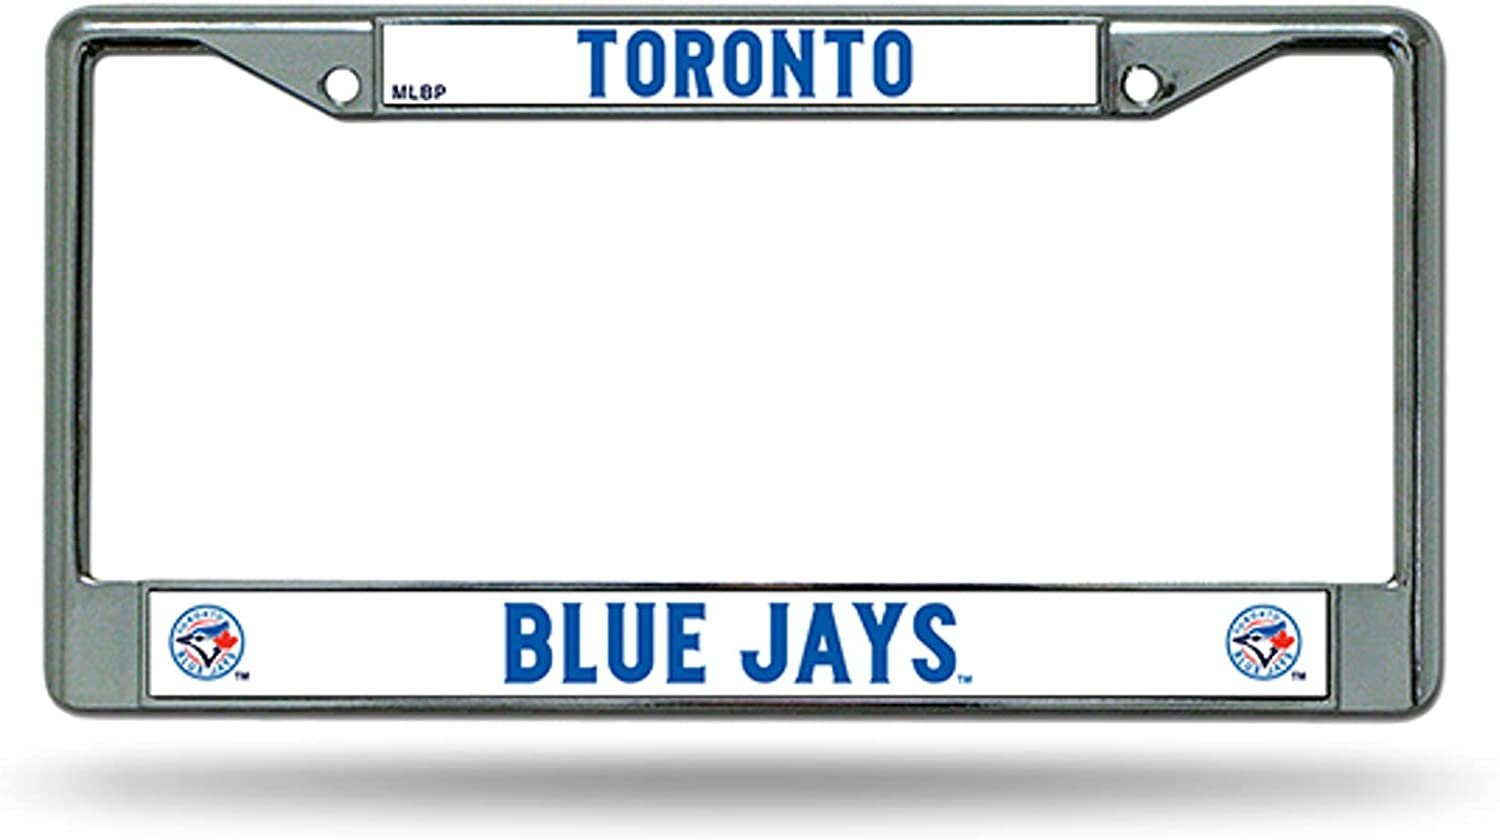 Toronto Blue Jays Premium Metal License Plate Frame Chrome Tag Cover, 12x6 Inch